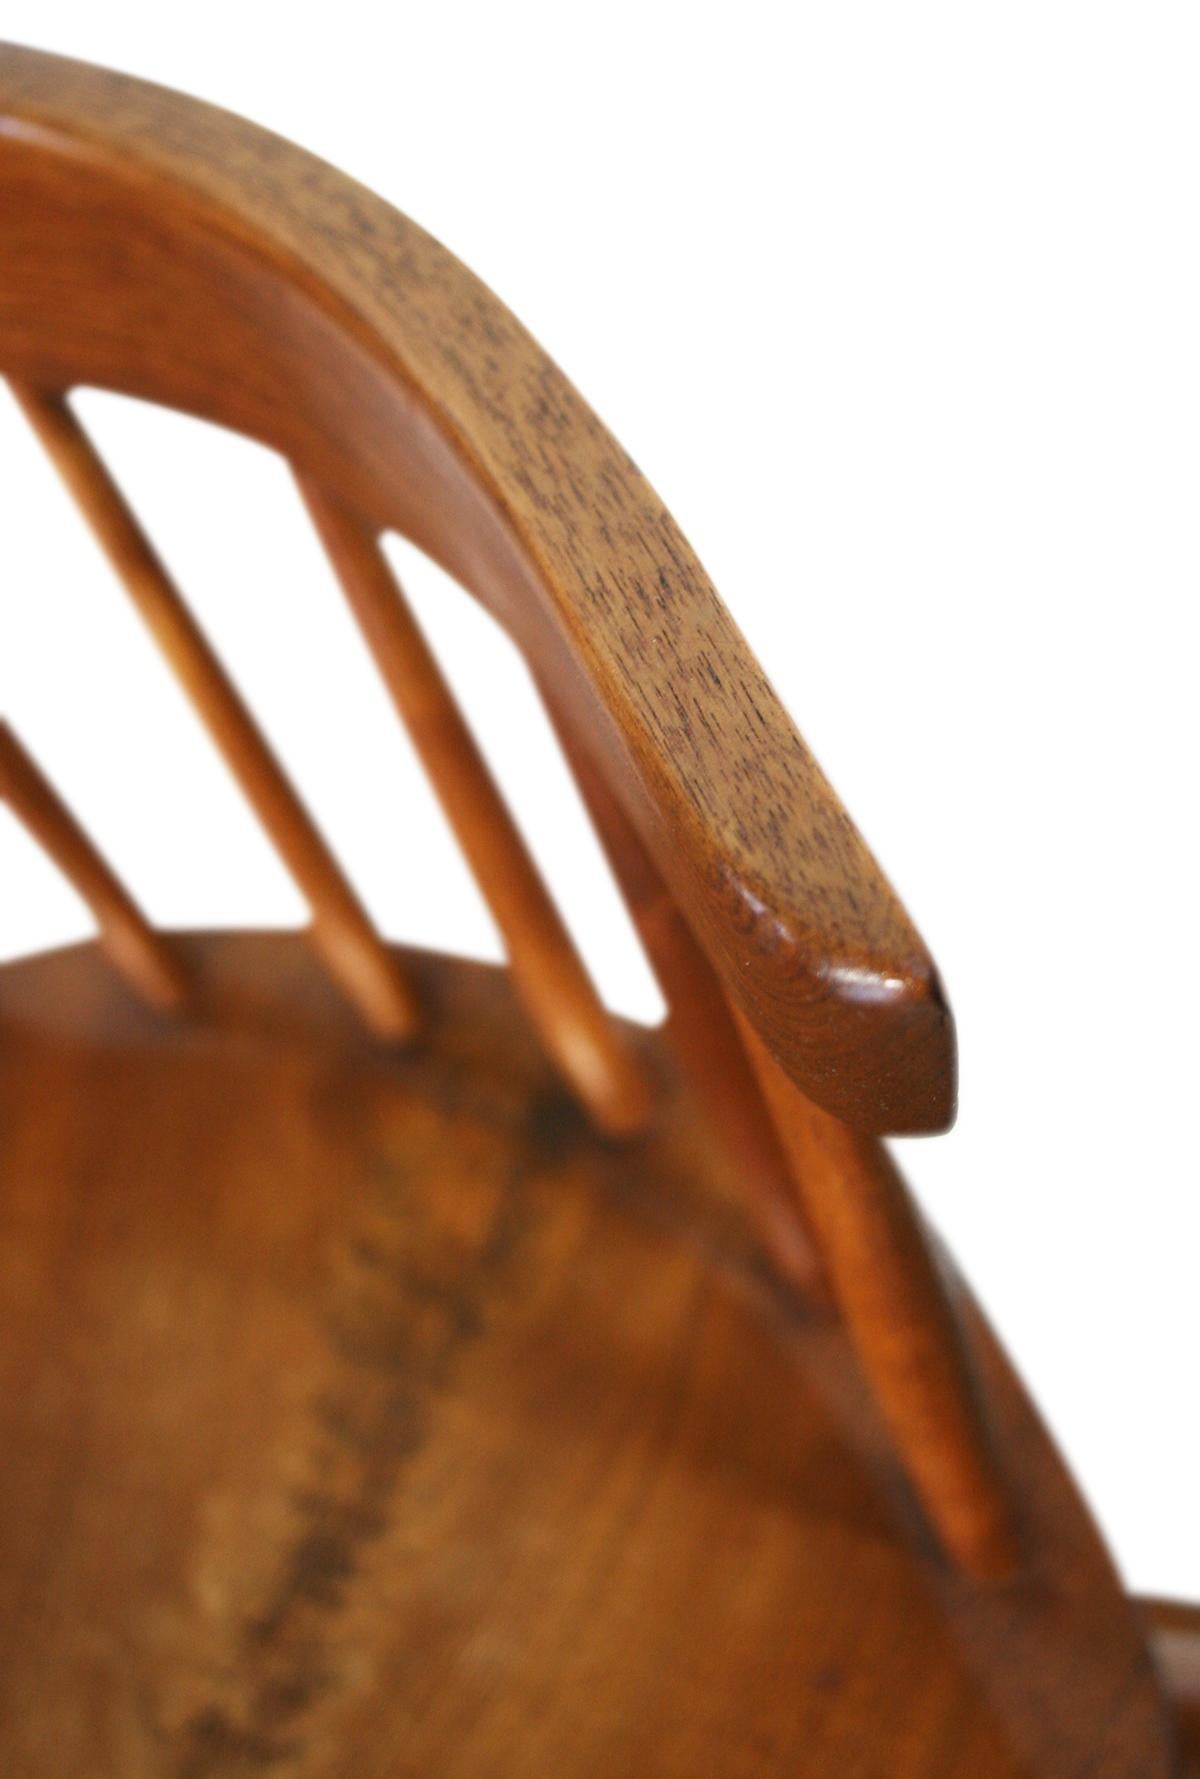 American Craftsman Beautiful George Nakashima Mira Stool Chair Solid walnut hand made Studio Craft